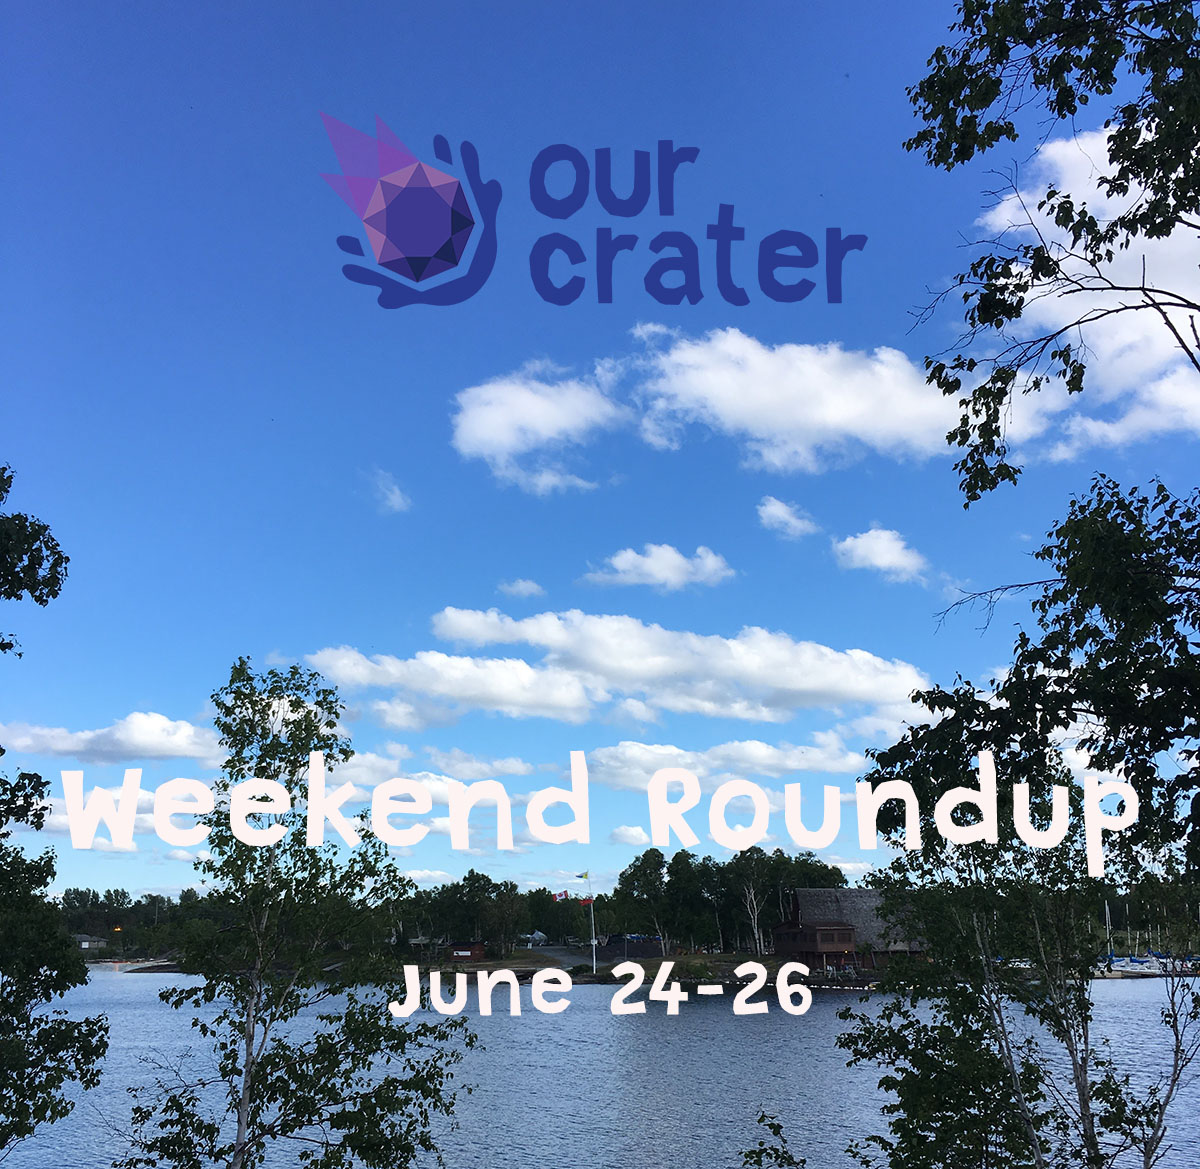 Weekend Roundup: June 24-26